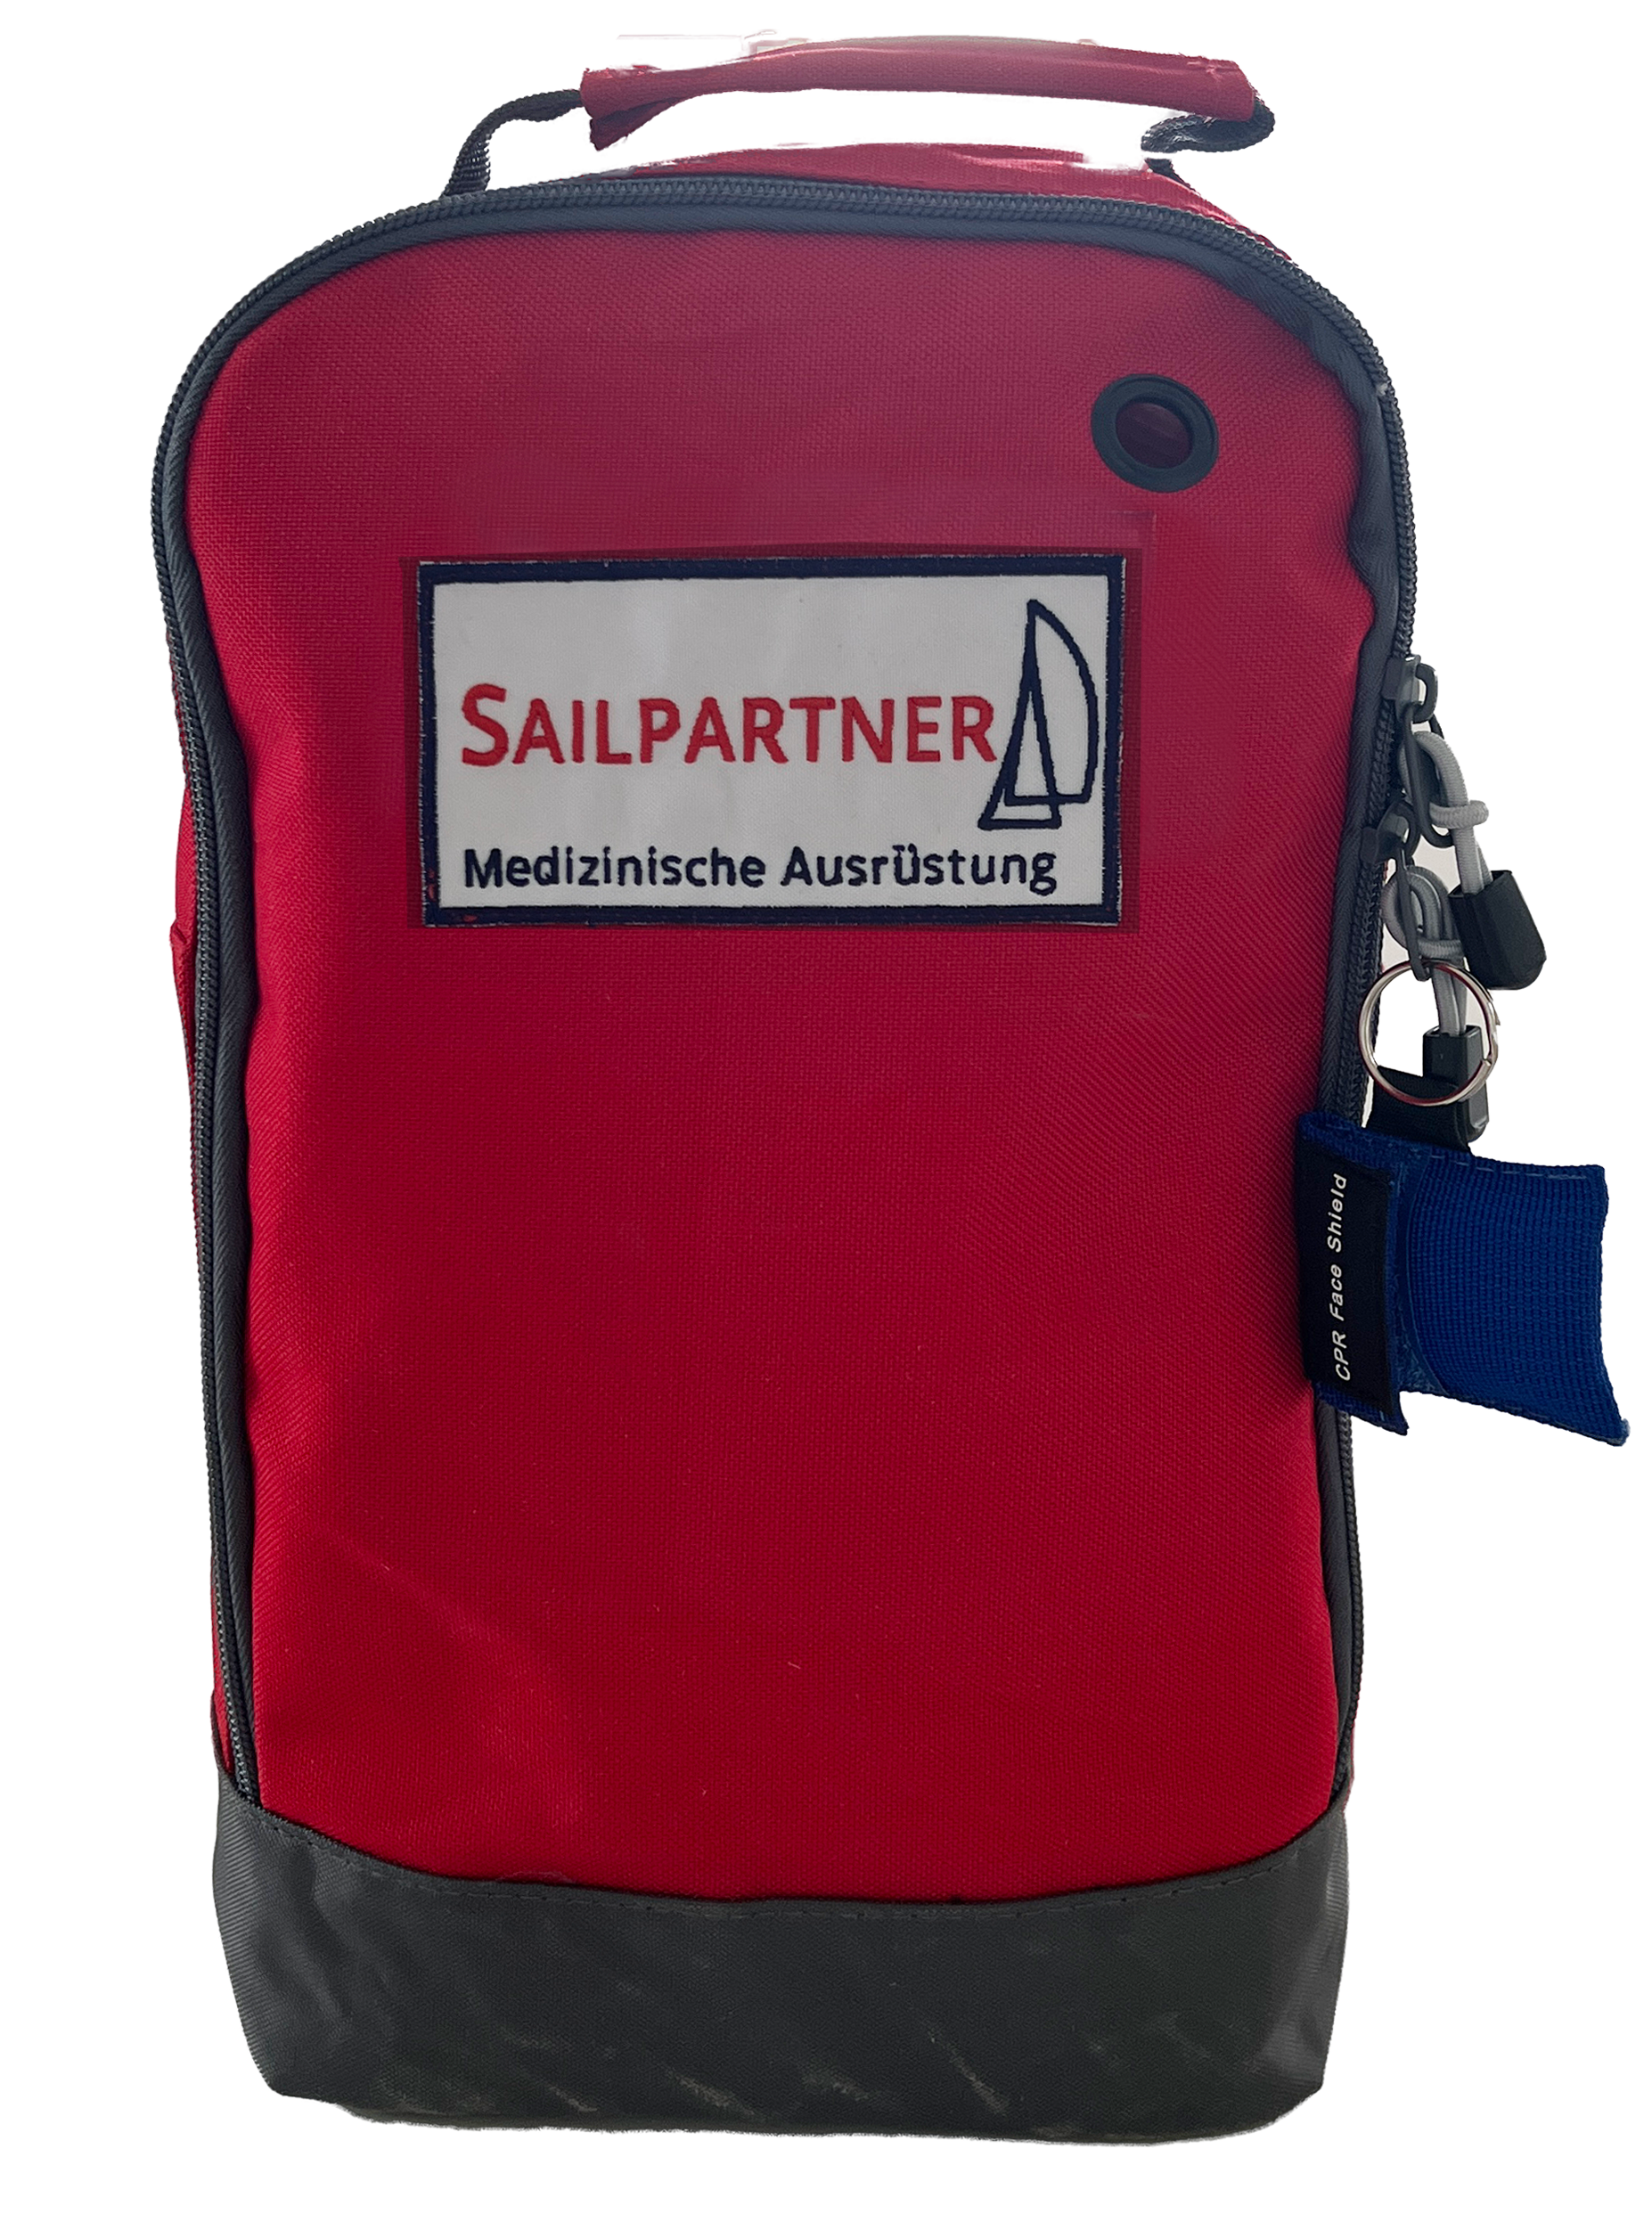 Sailpartner Erste-Hilfe Notfall-Tasche BALTIC